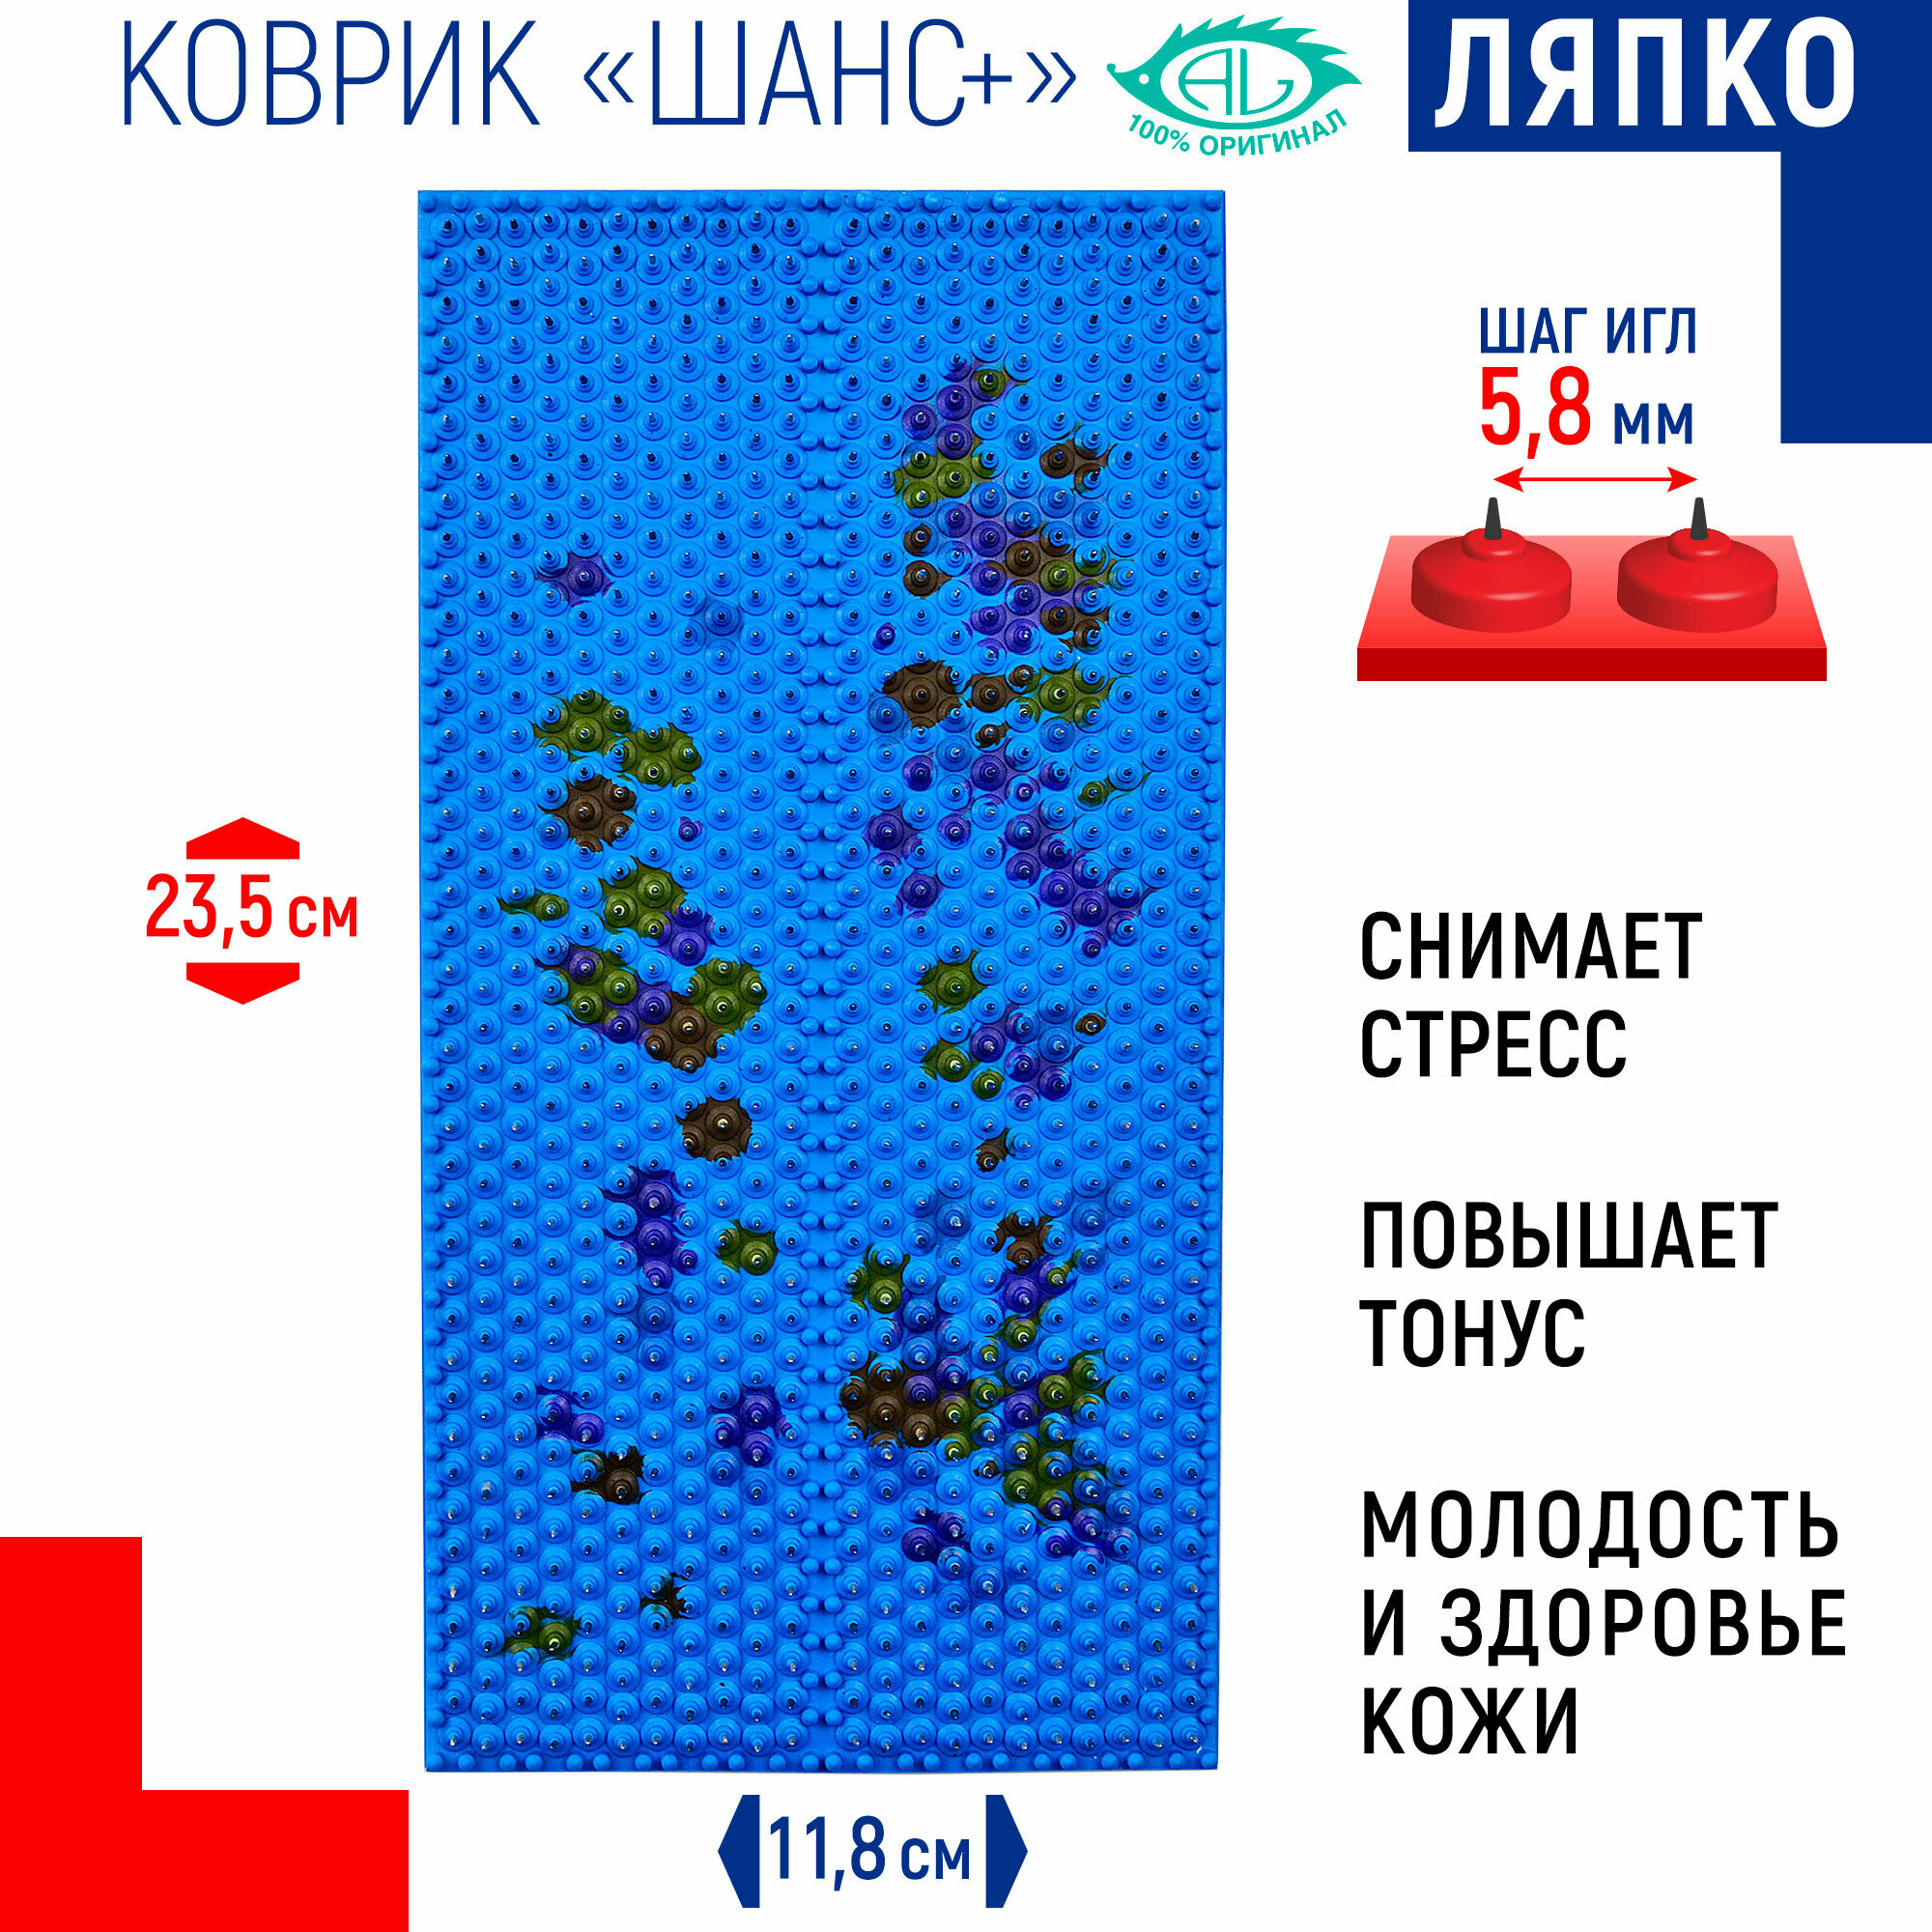 Массажер коврик аппликатор Ляпко Shans, шаг игл 5.8 мм (23.5х11.8 см)